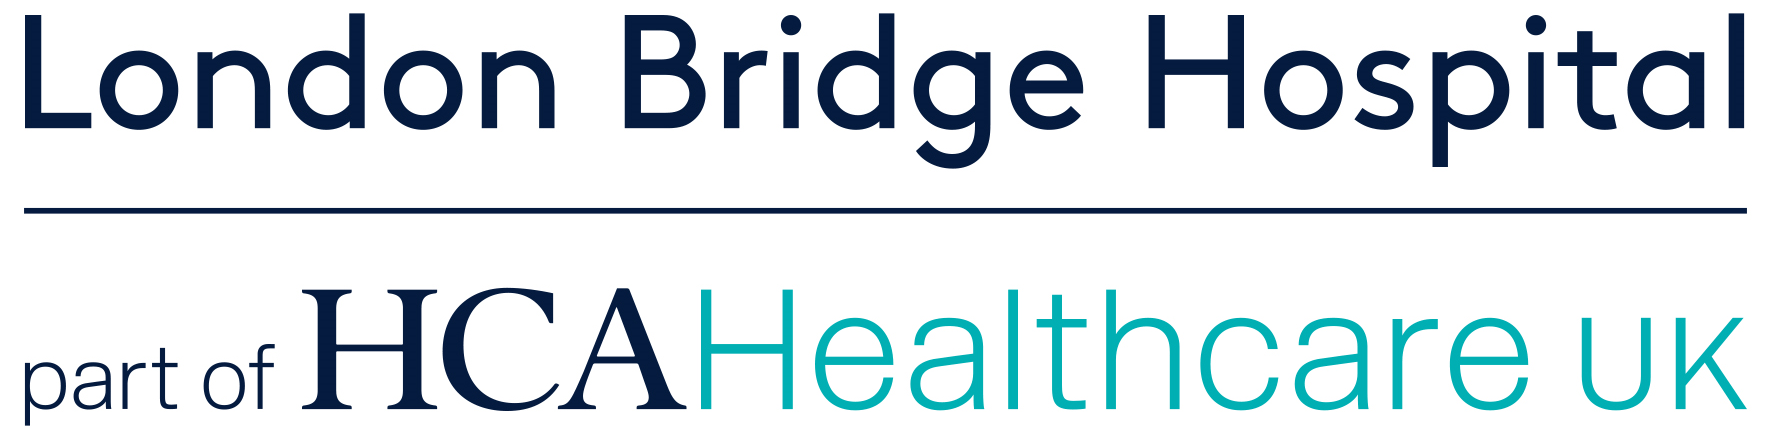 London Bridge Hospital_clinic